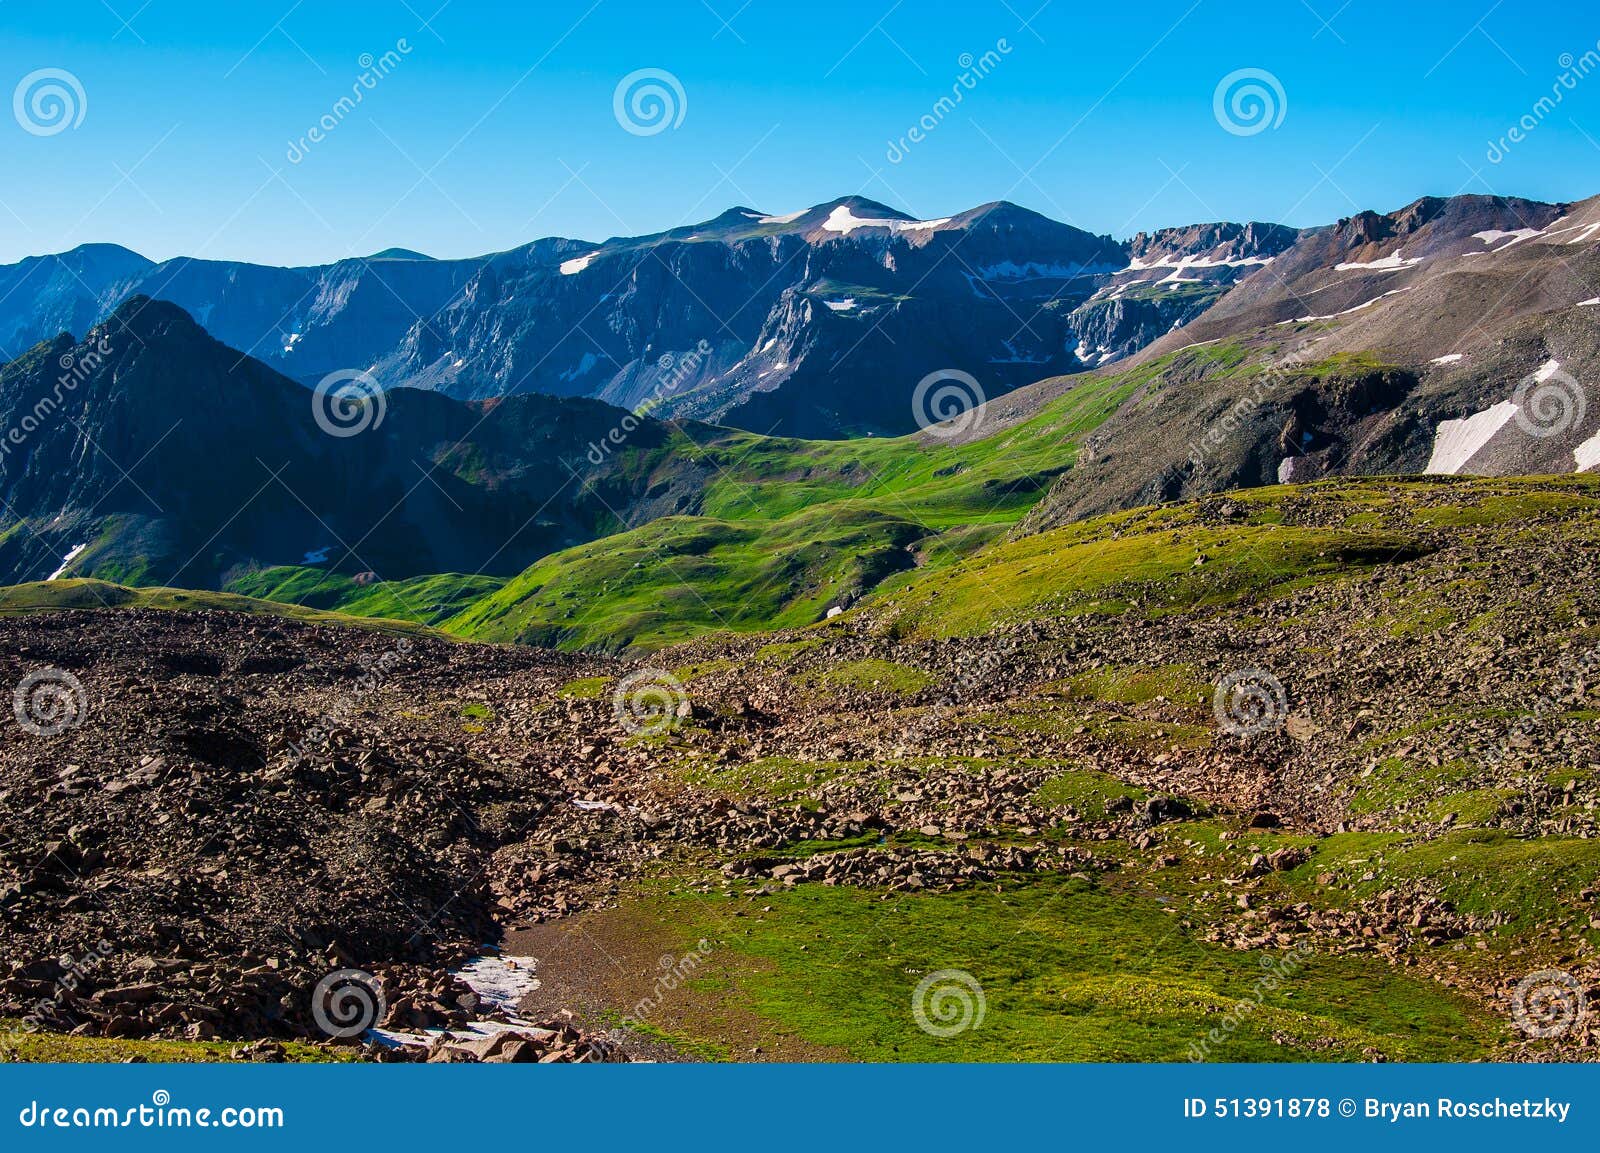 colorado rocky mountains sneffels range